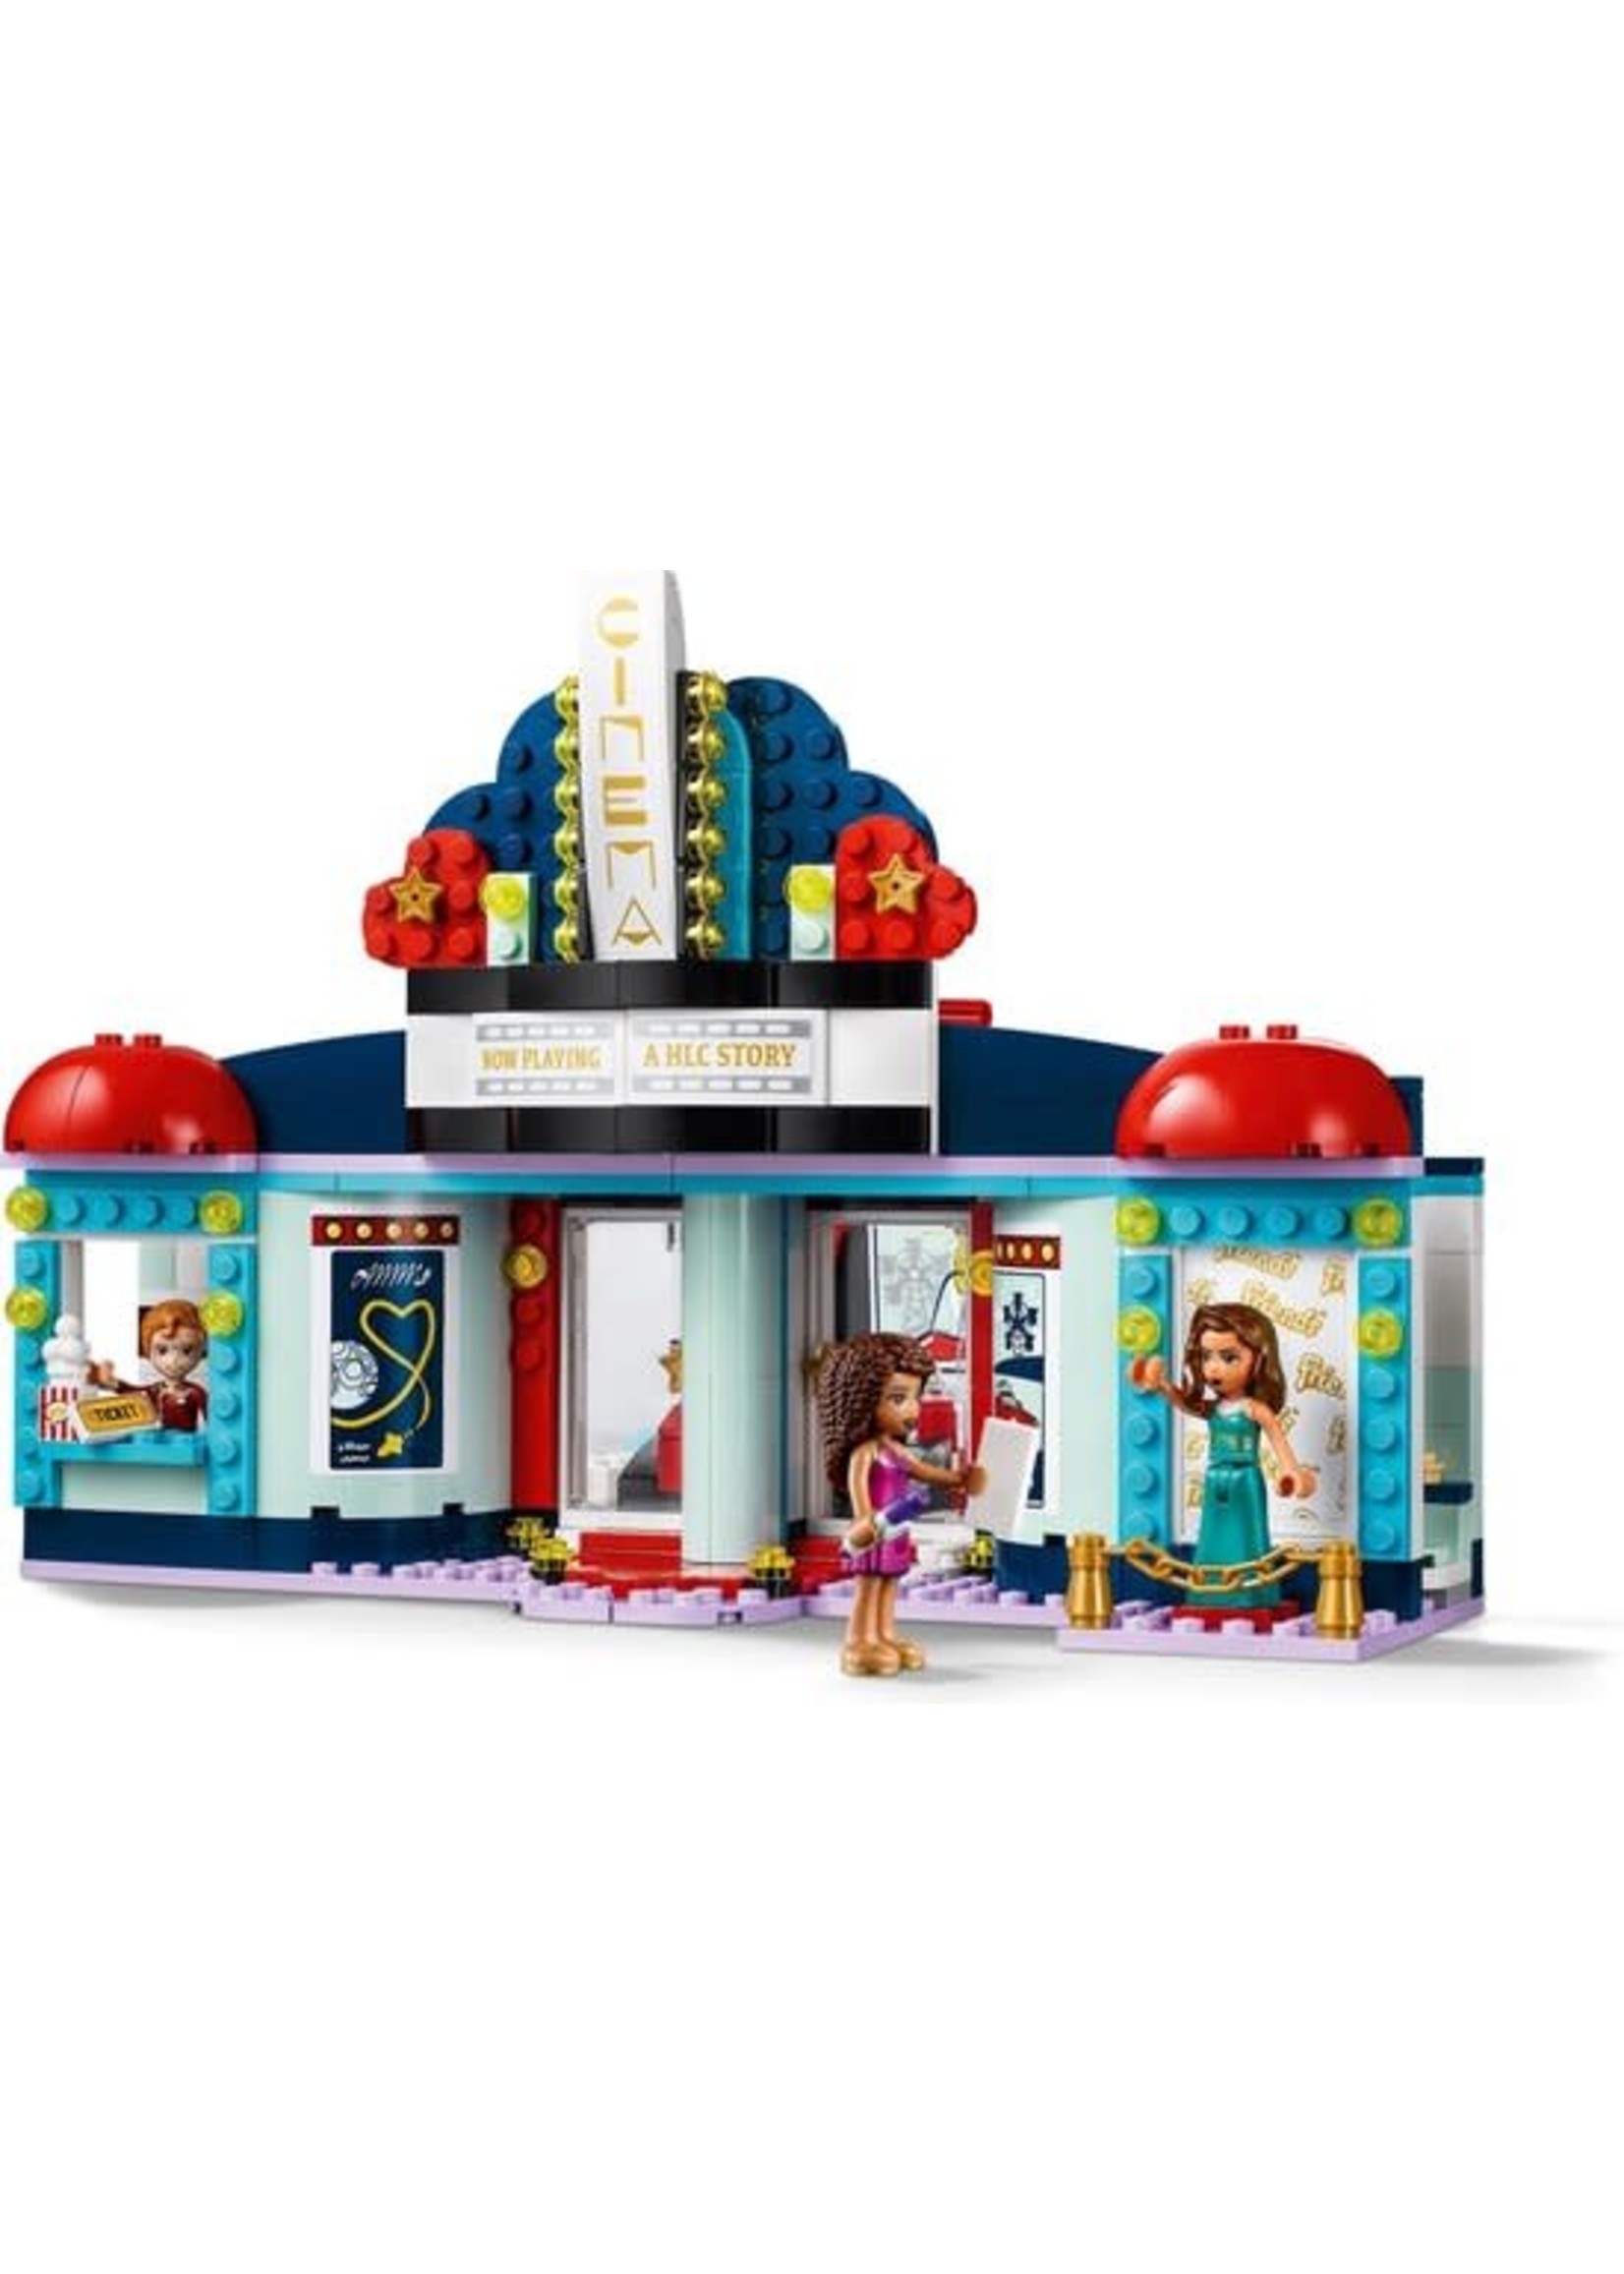 Lego Lego Friends 41448 Heartlake City Bioscoop